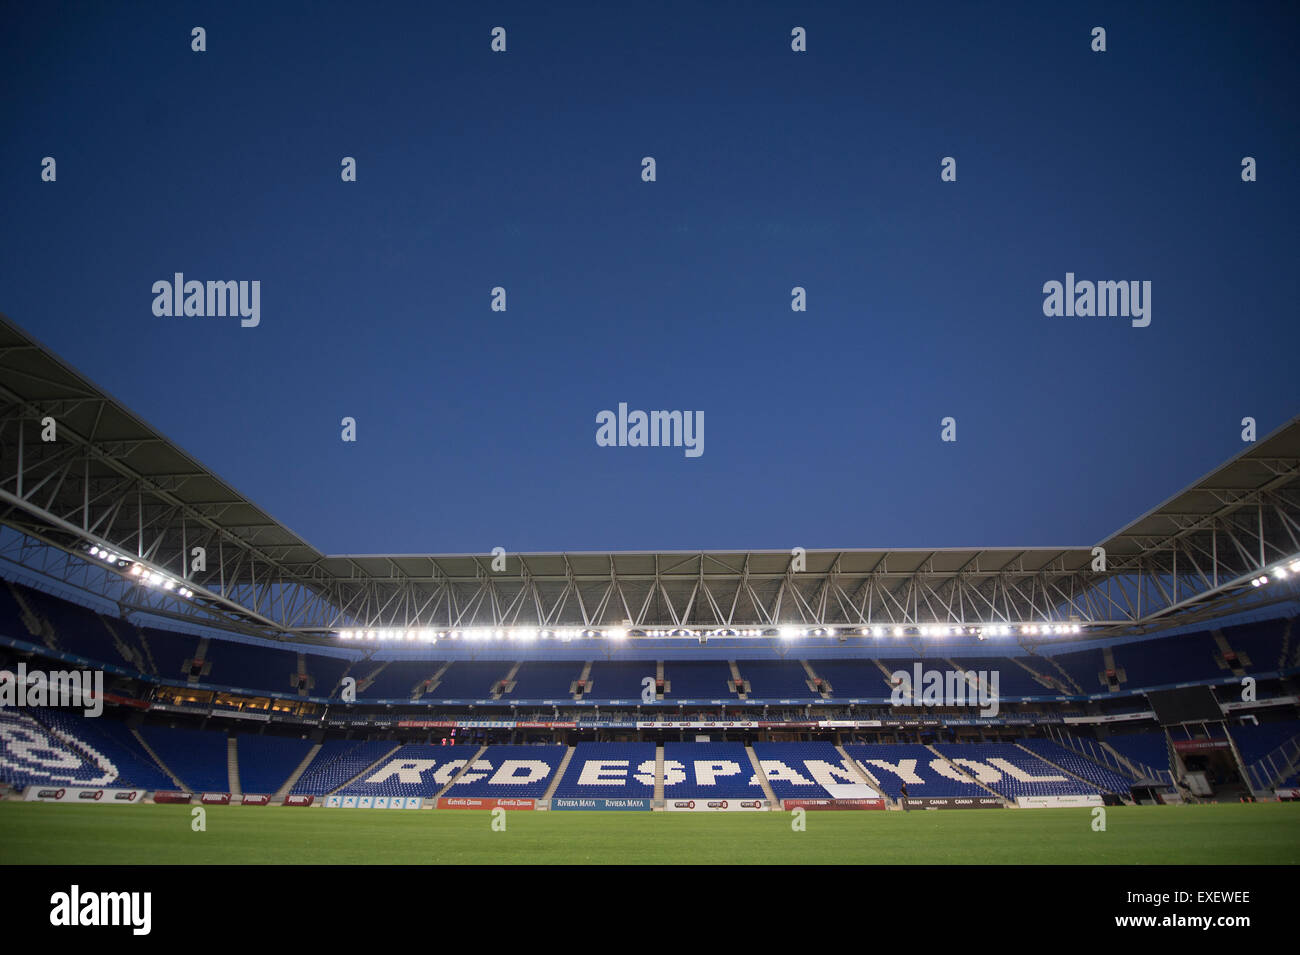 Rcd espanyol stadium hi-res stock photography and images - Alamy